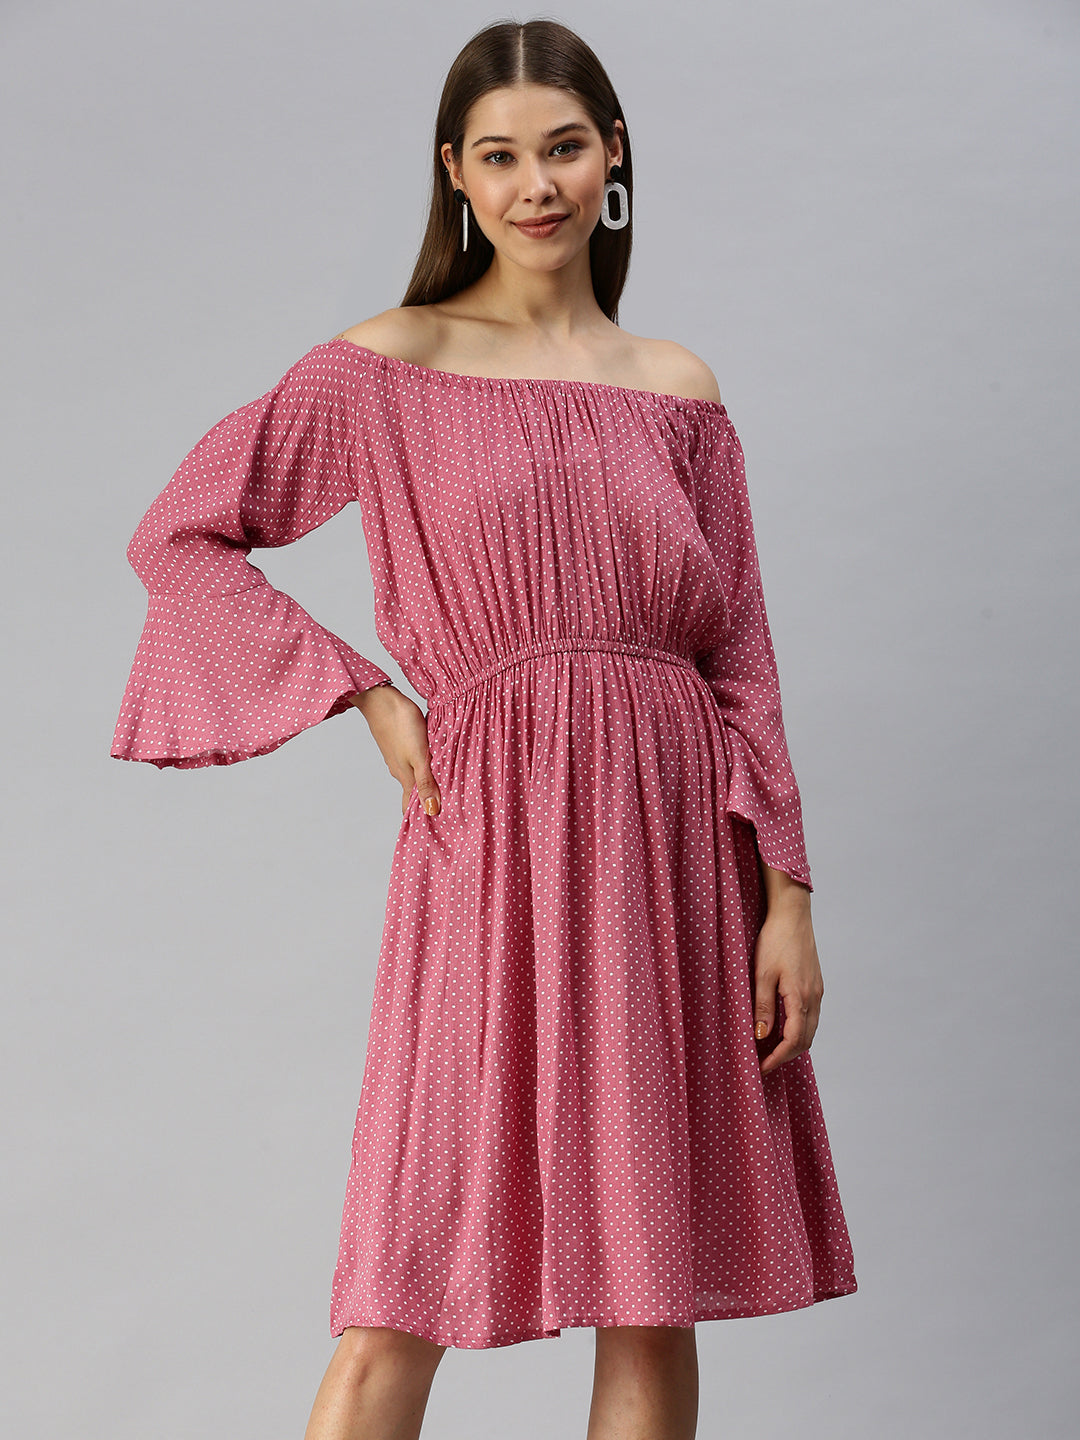 Women's Pink Printed Empire Dress